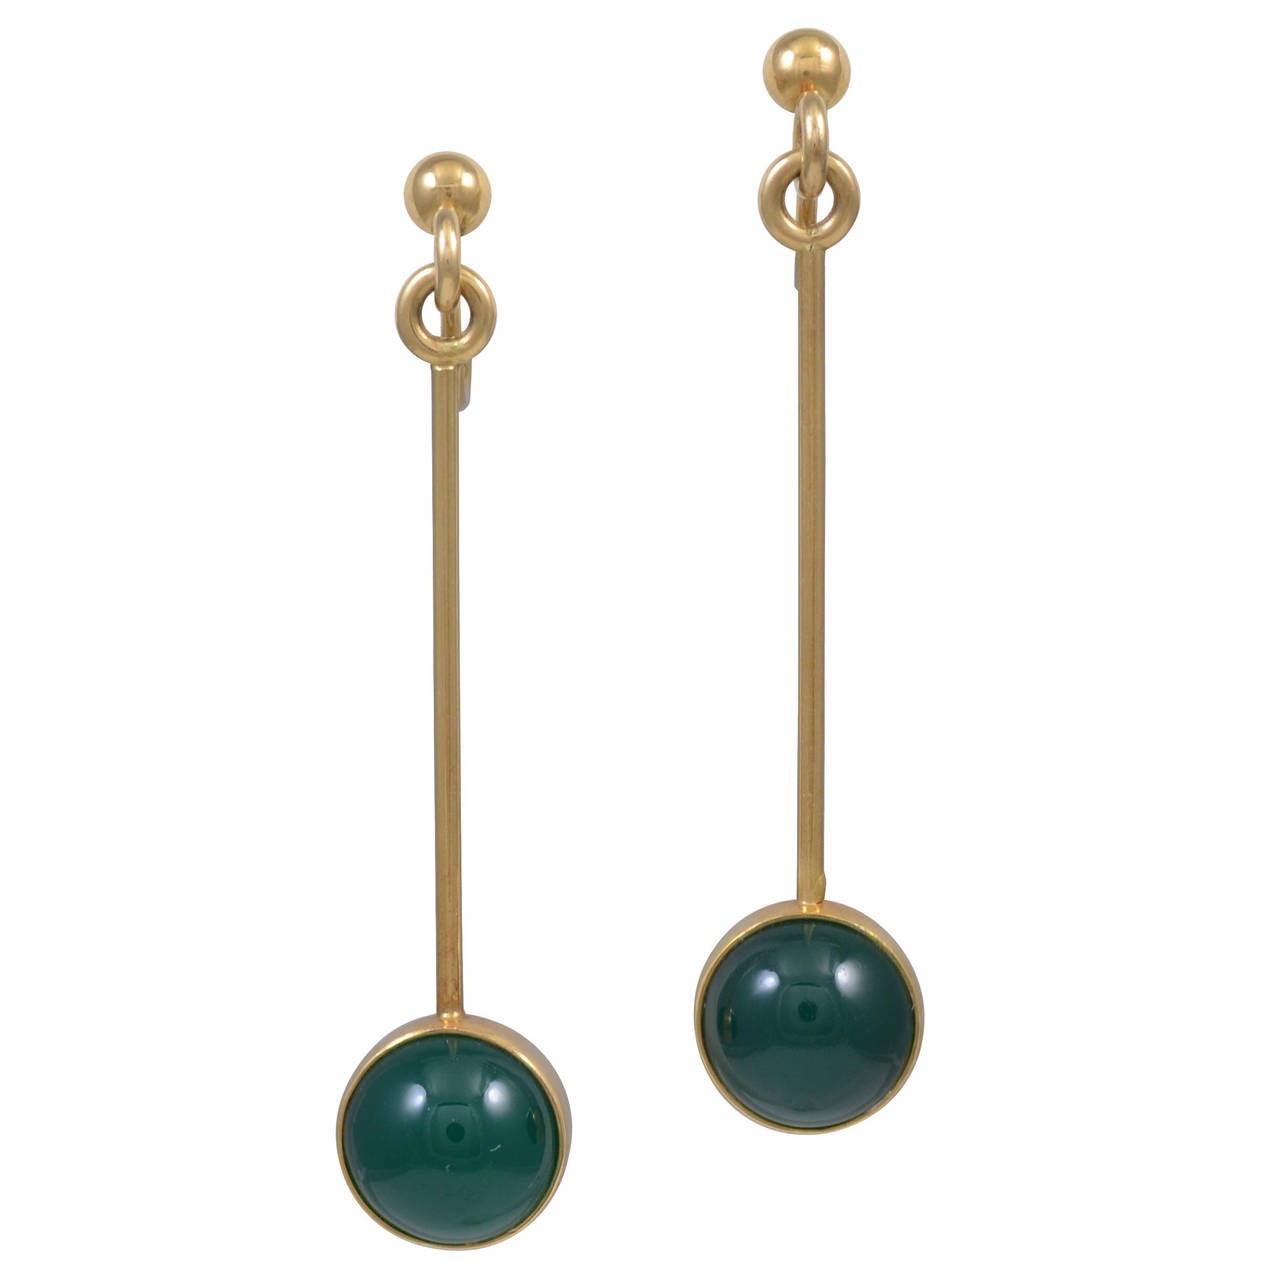 Georg Jensen Green Agate Gold Earrings by M Stephensen For Sale